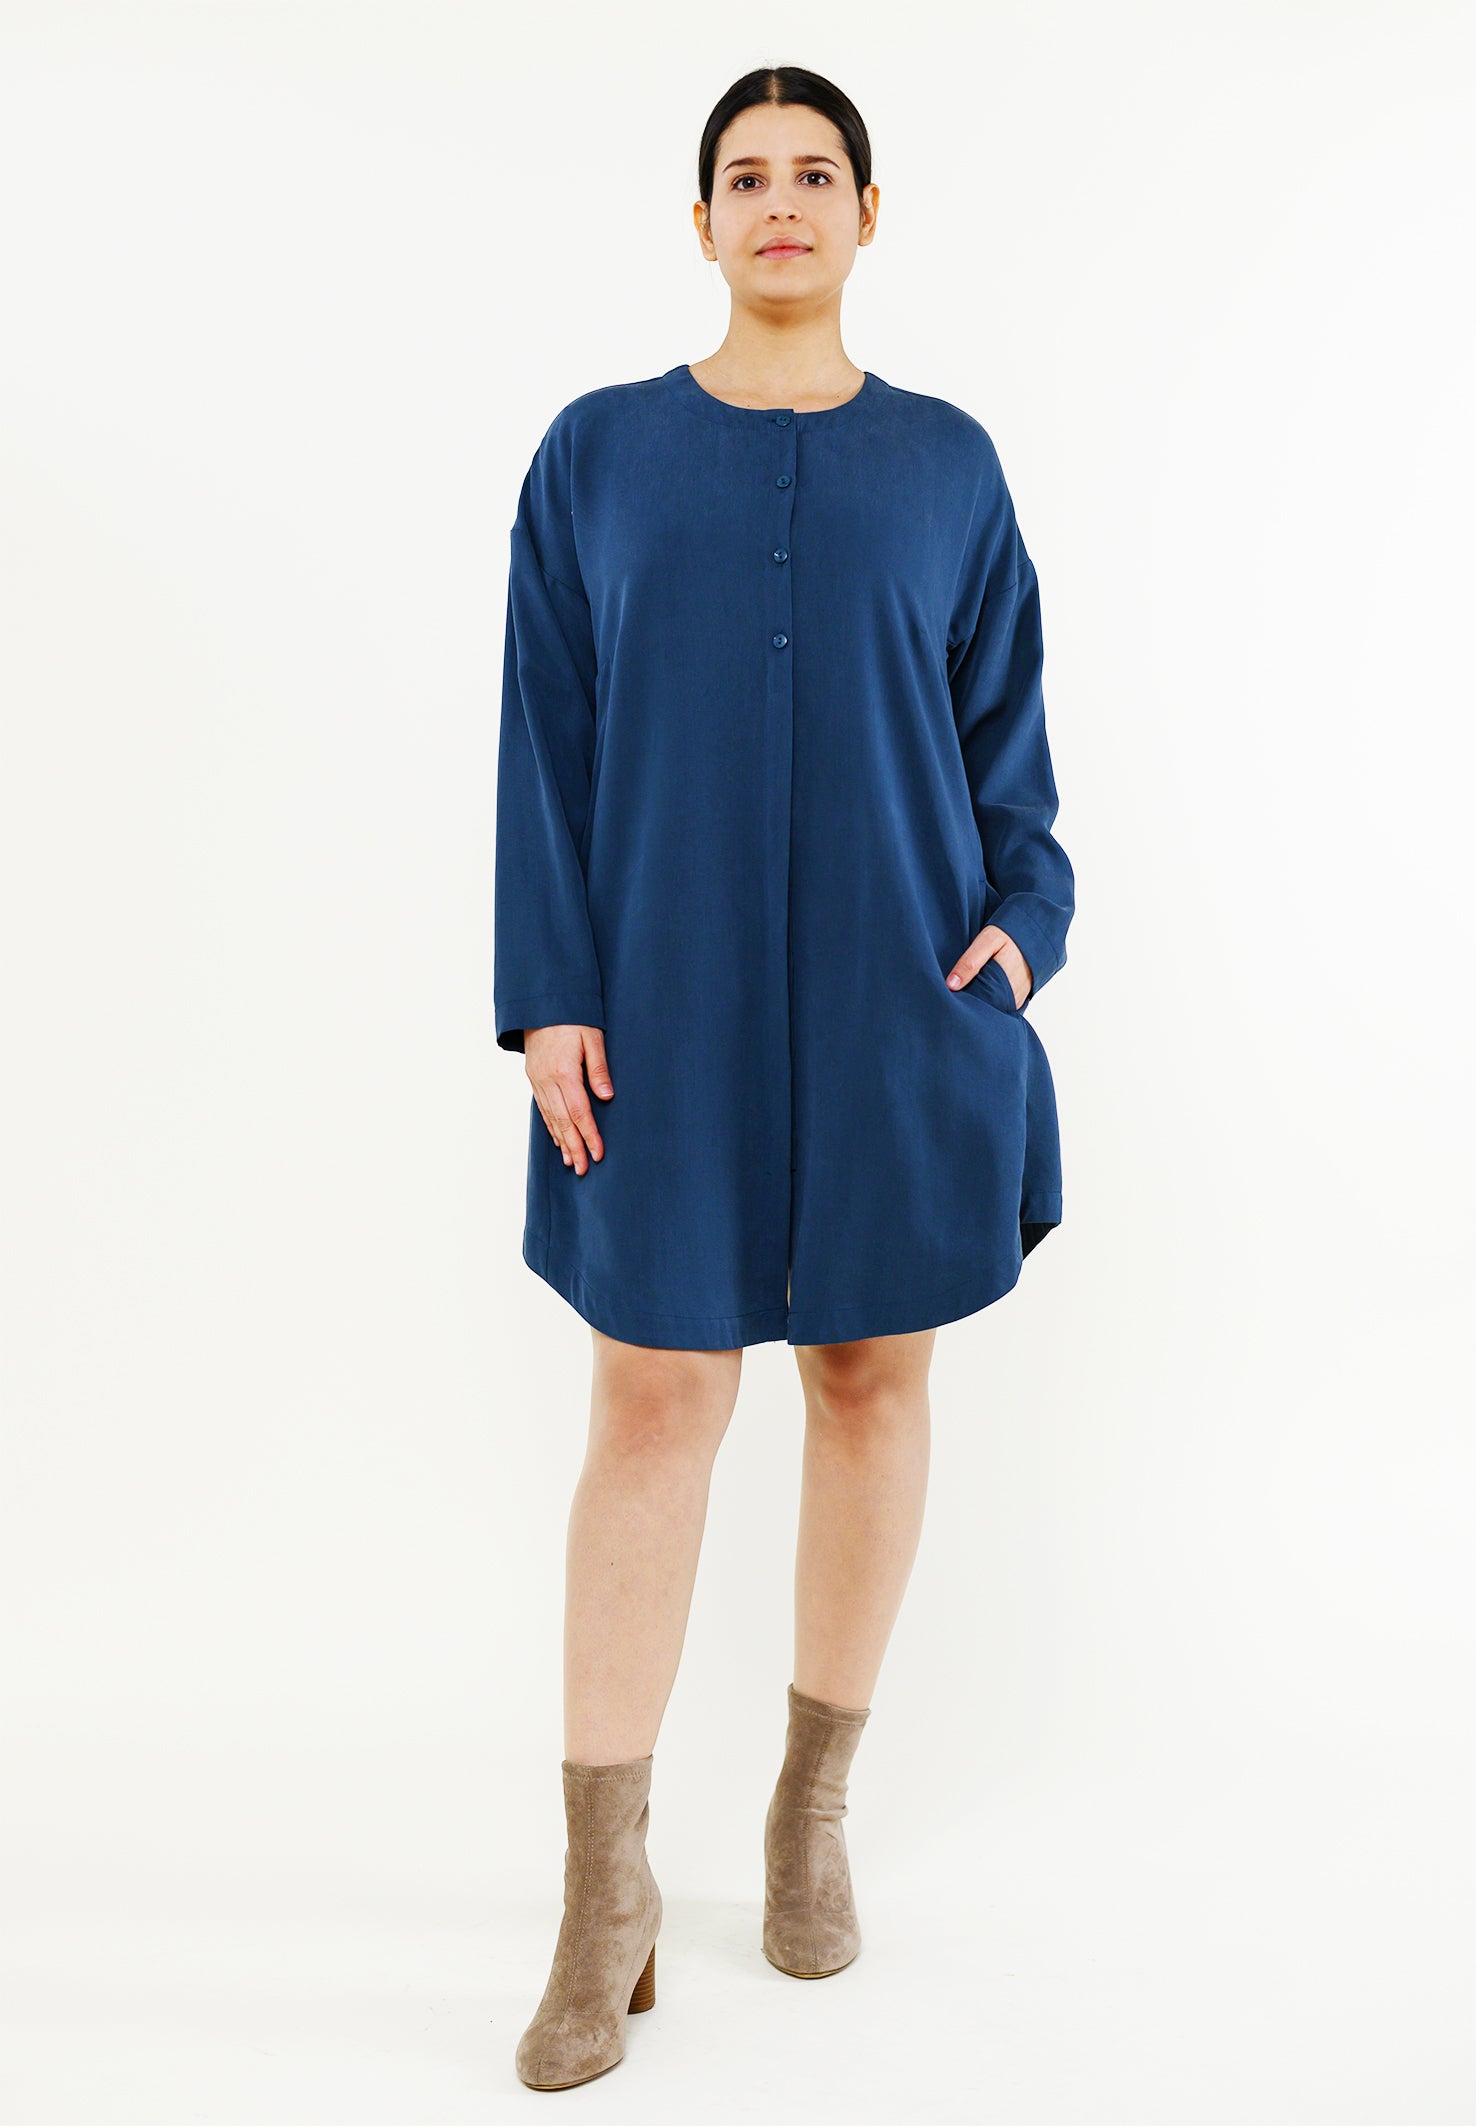 Oversize shirt dress "FII-NE" in blue made of Tencel